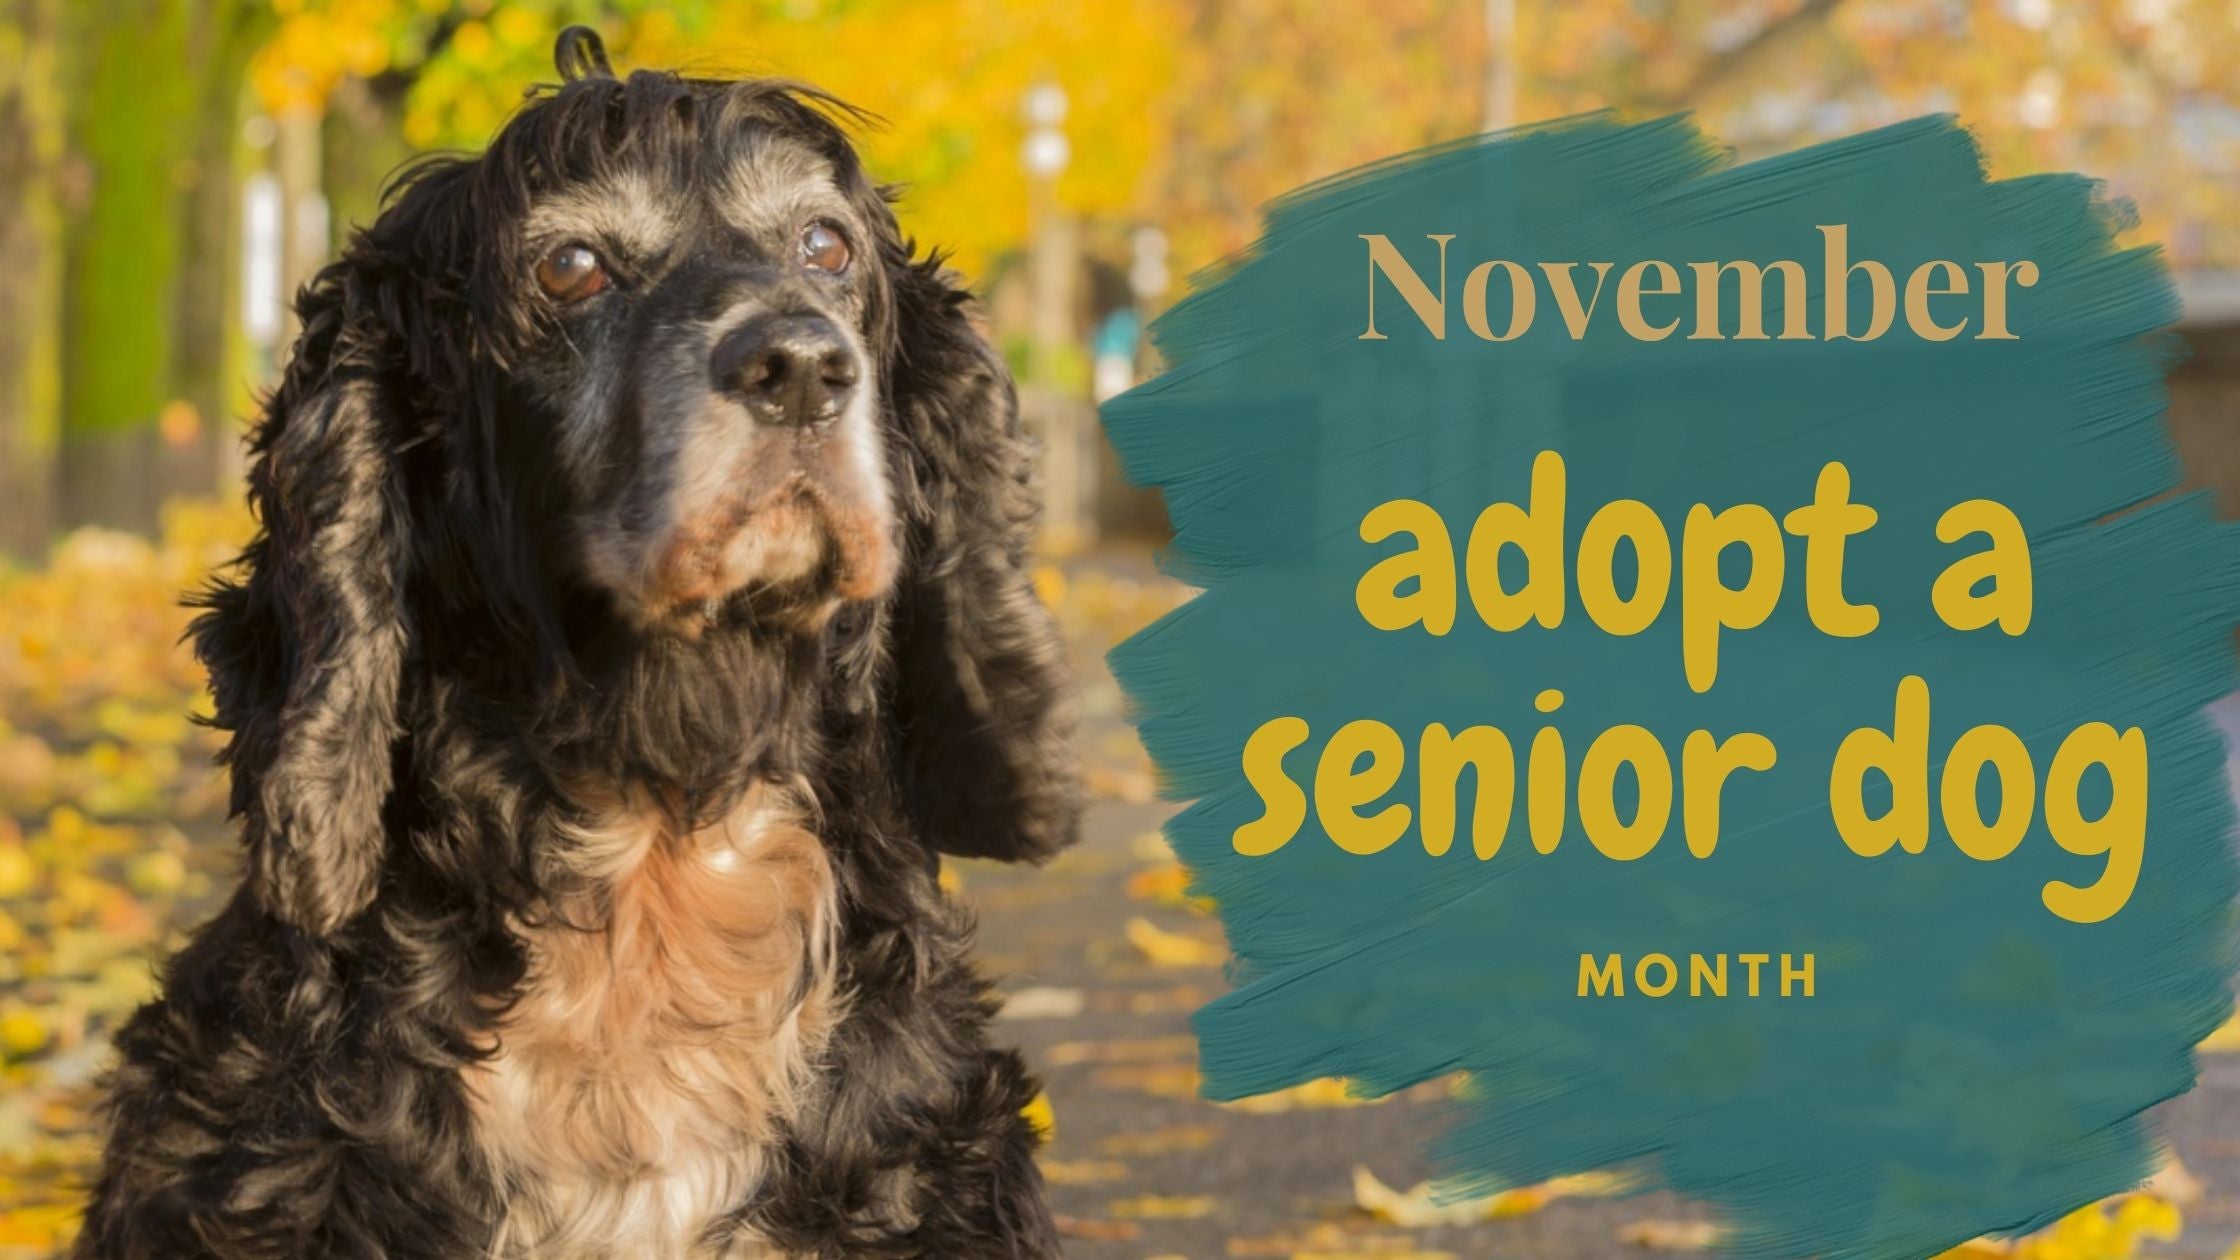 November is Adopt a Senior Dog Month